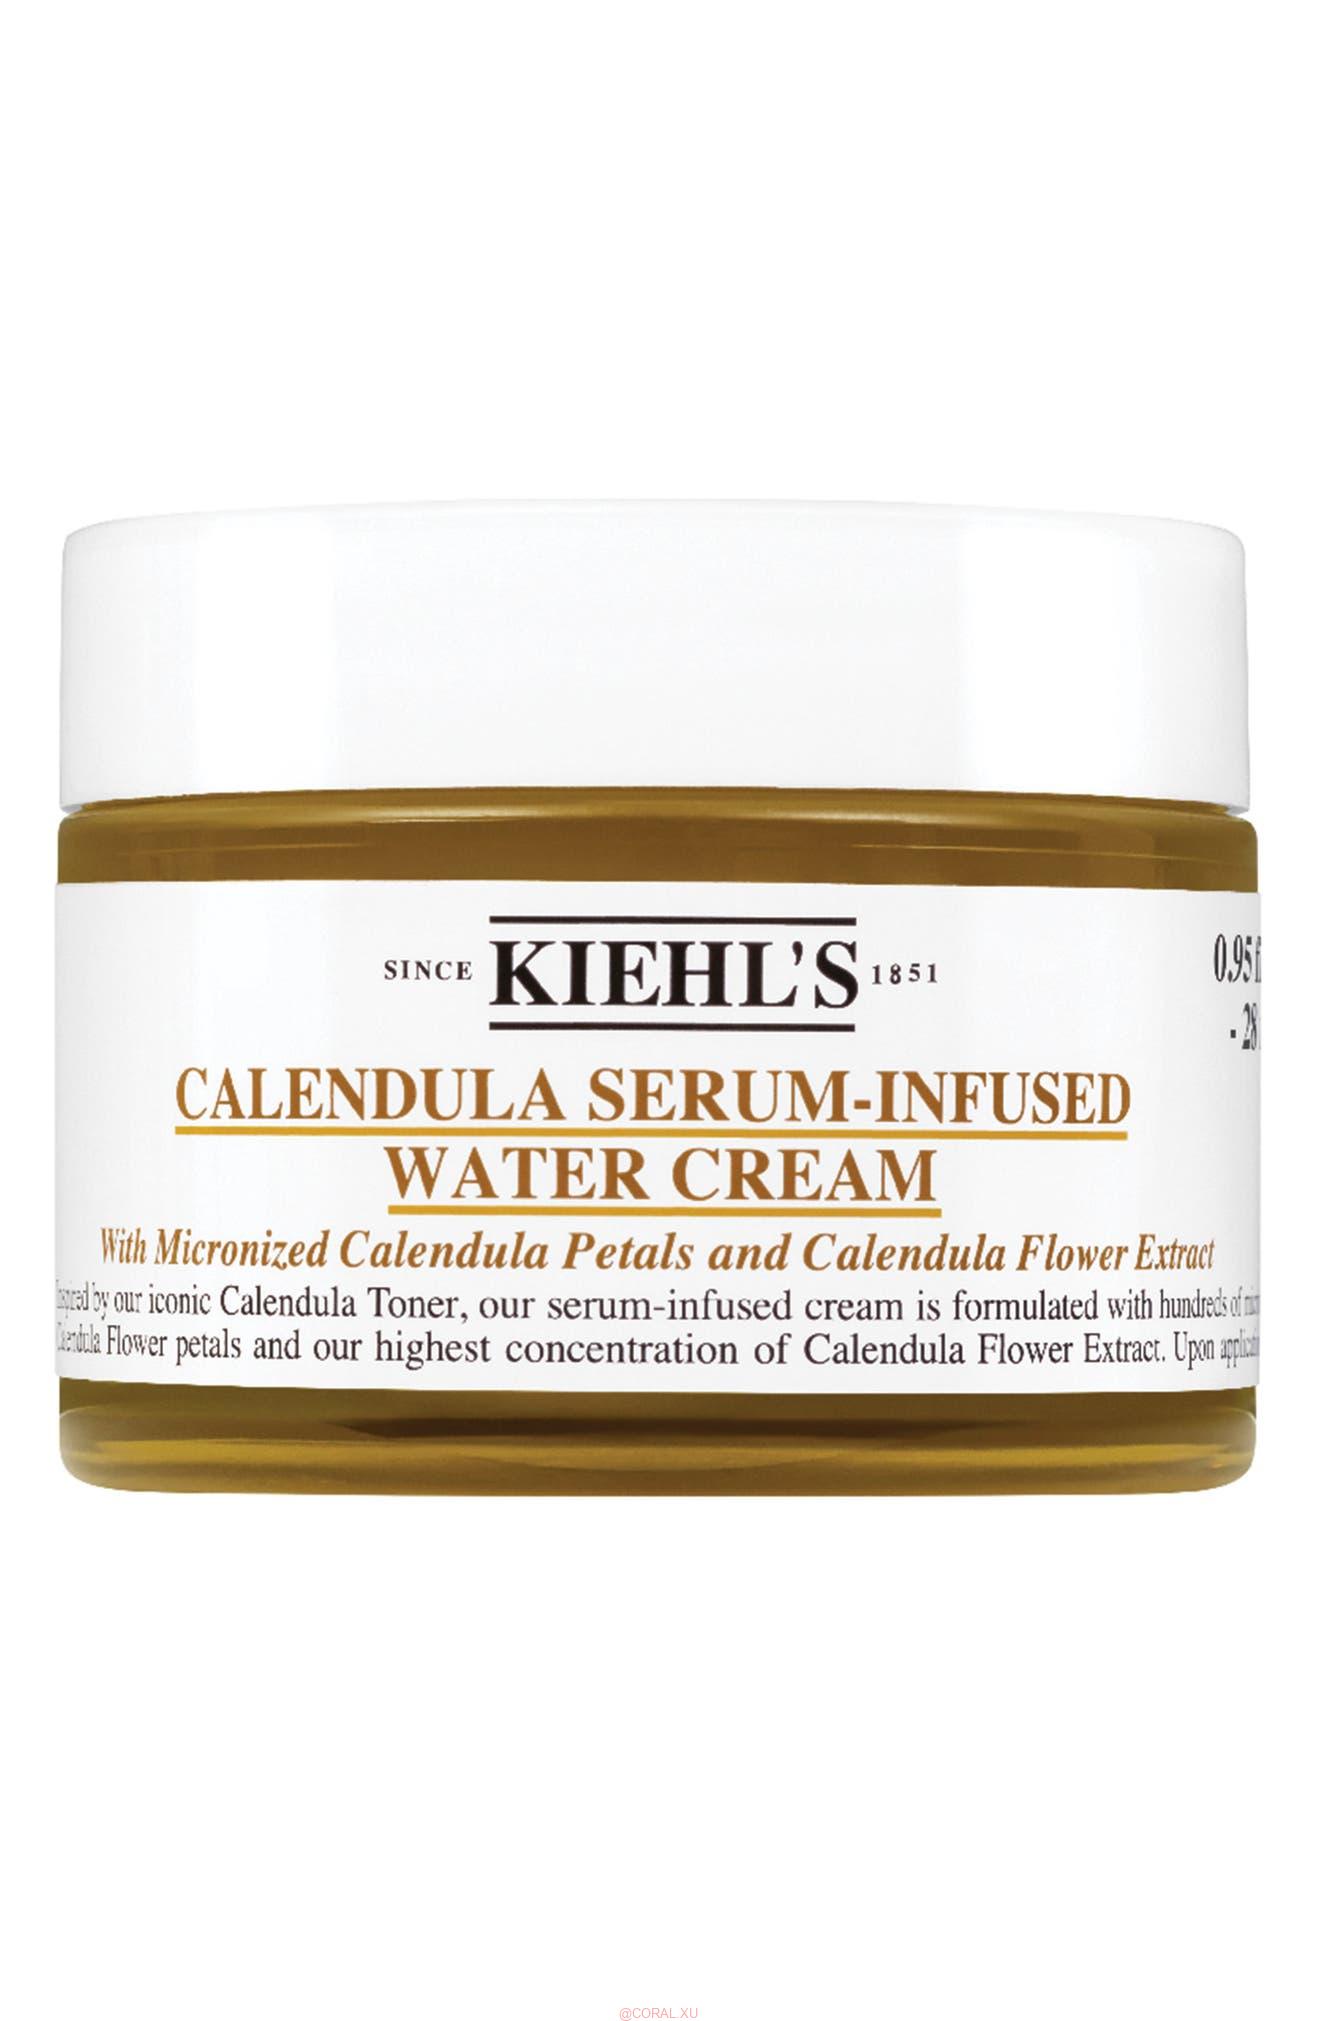 Kiehls Calendula Serum Infused Water Cream Review - Kiehl’s Calendula Serum-Infused Water Cream Review